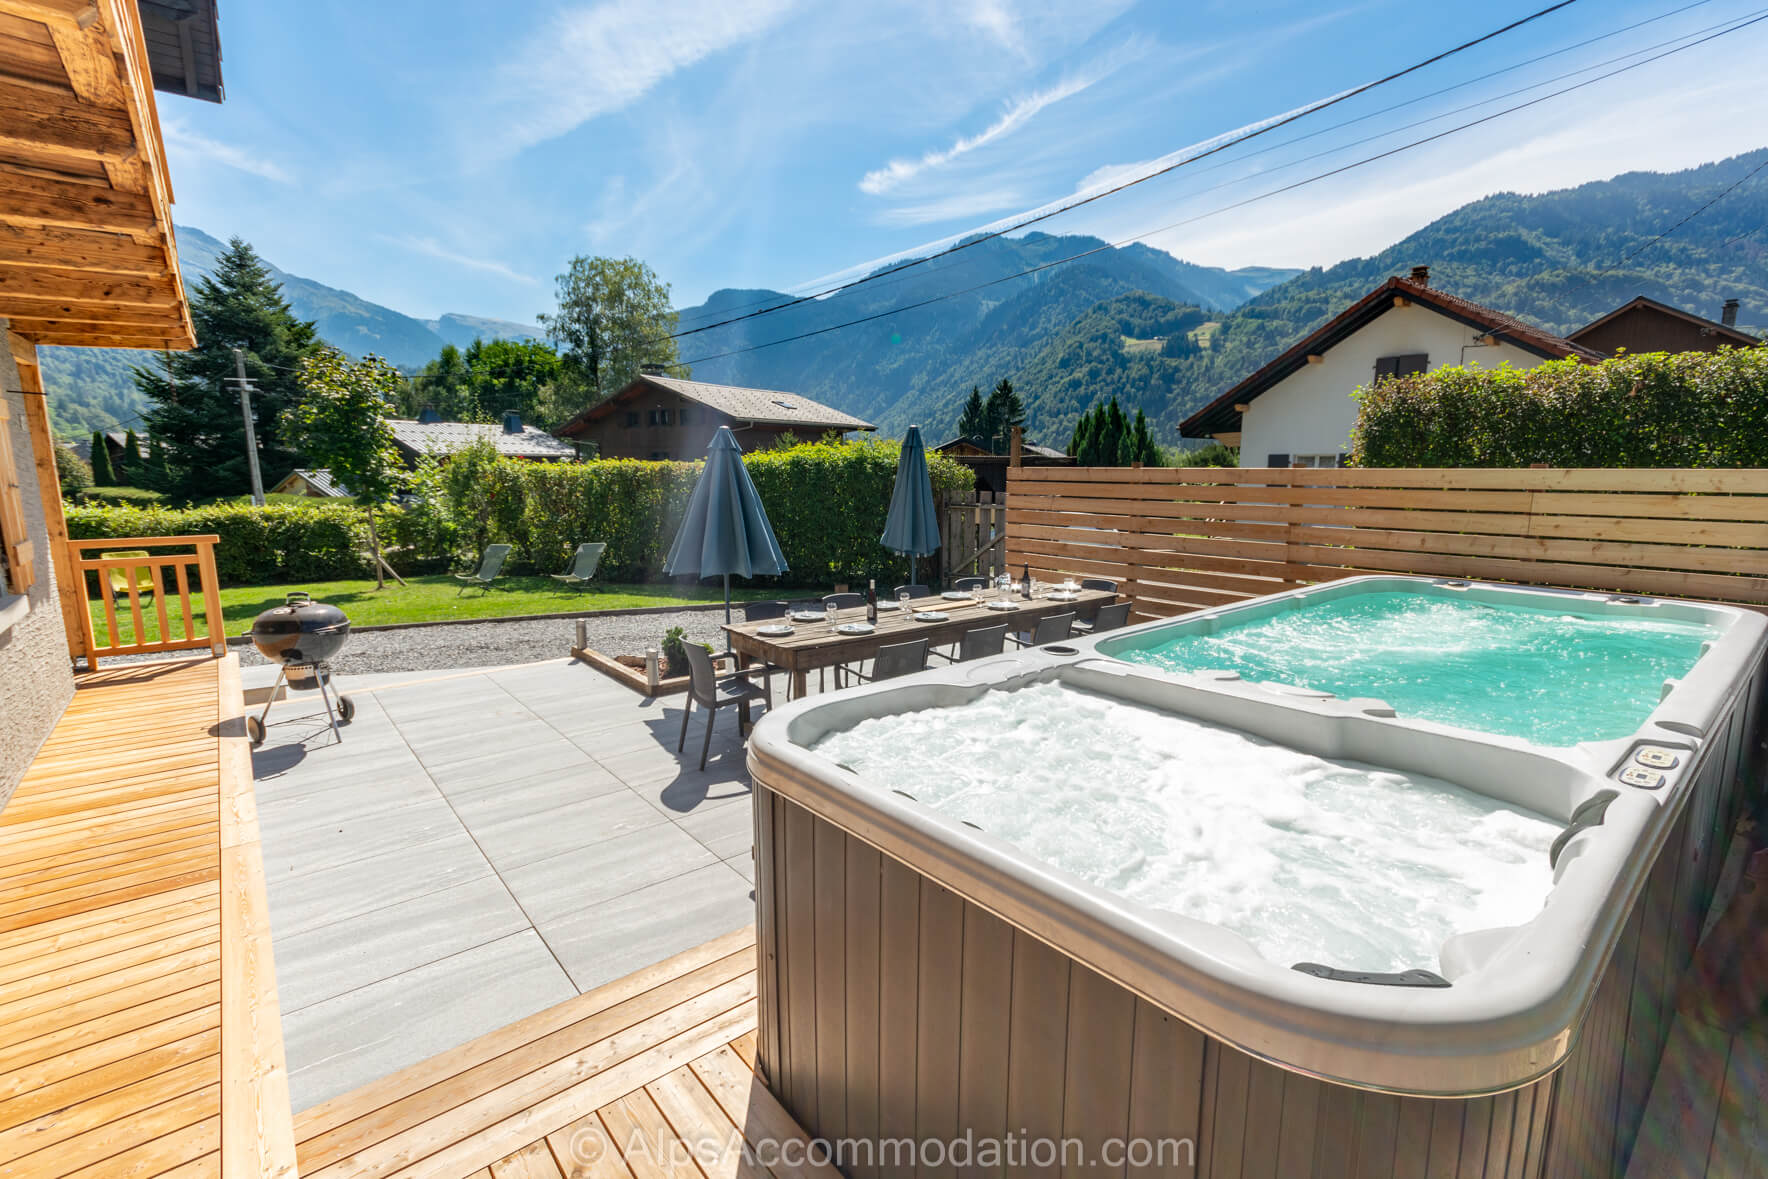 Maison Deux Coeurs Samoëns - Swim Spa and hot tub